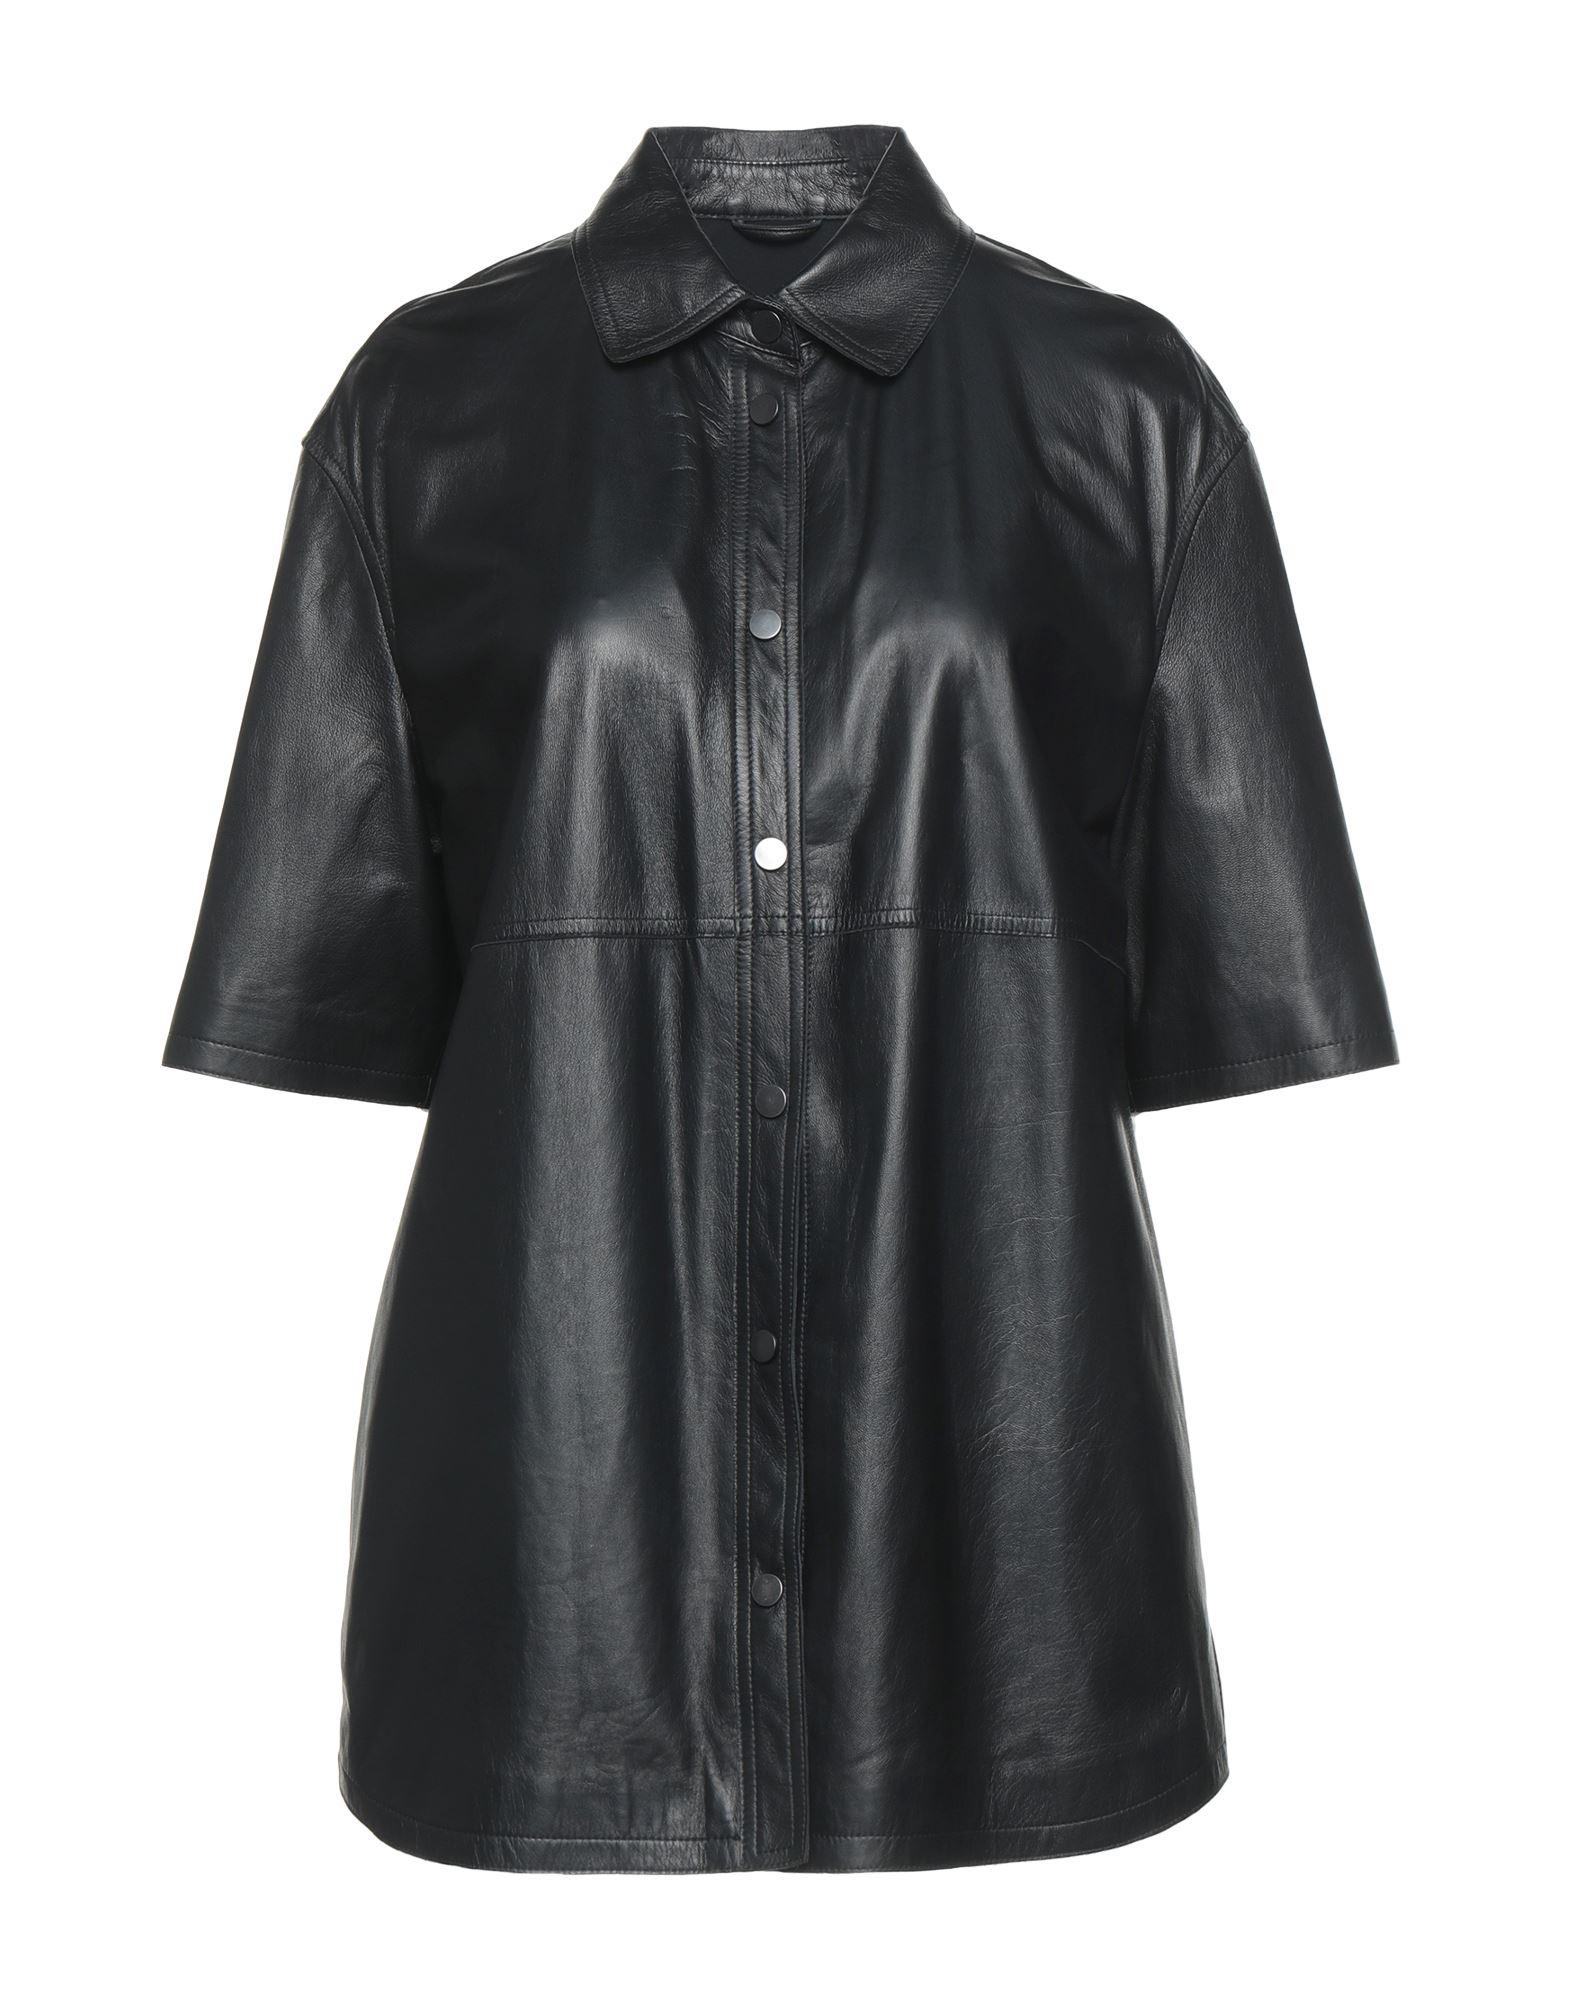 ＜YOOX＞ BRUNELLO CUCINELLI レディース シャツ ブラック S 革 100% / 真鍮/ブラス画像